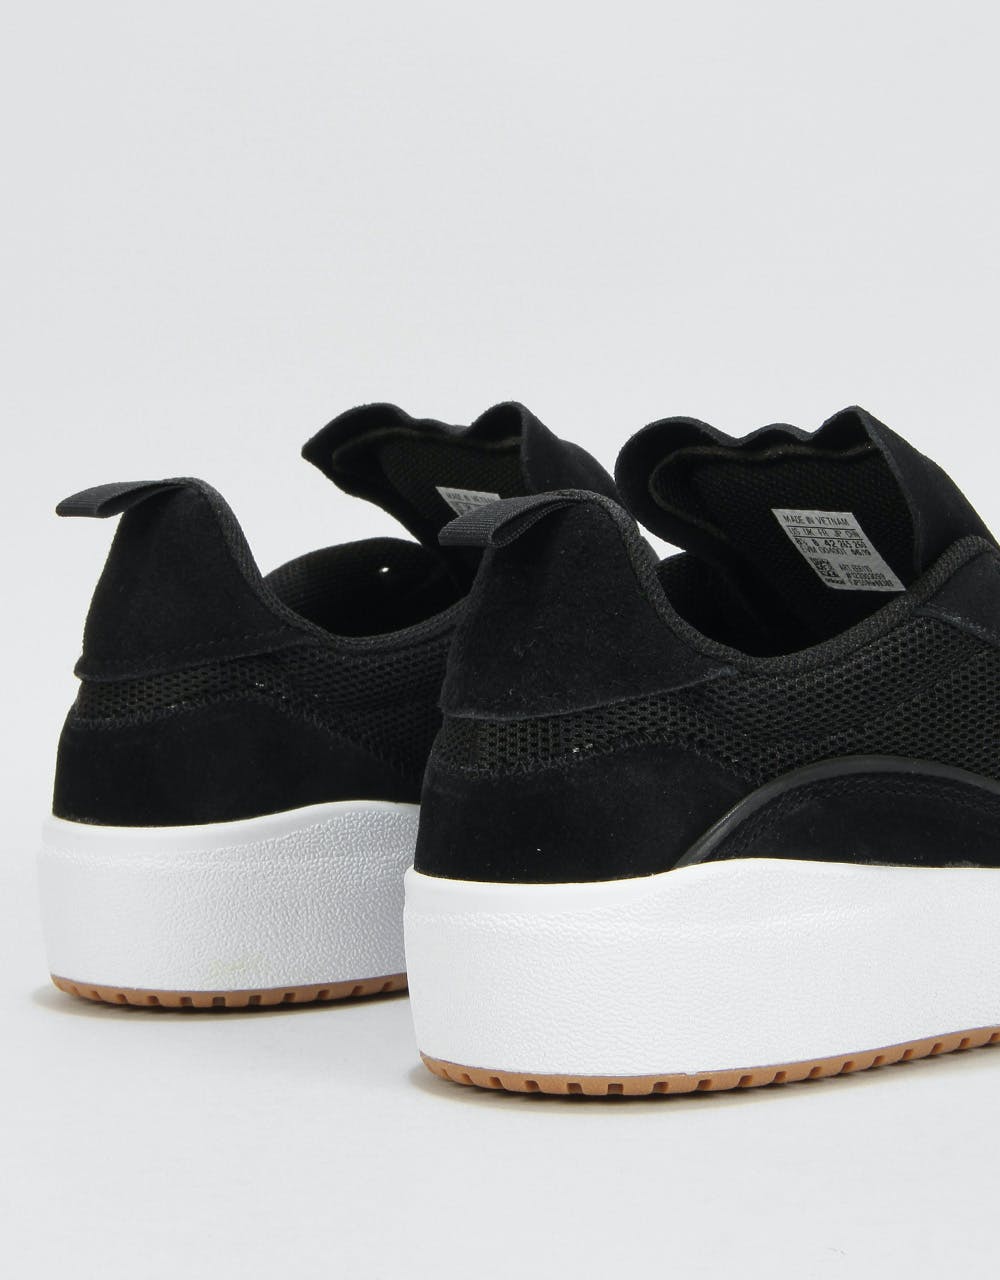 Adidas Liberty Cup Skate Shoes - Core Black/White/Gum